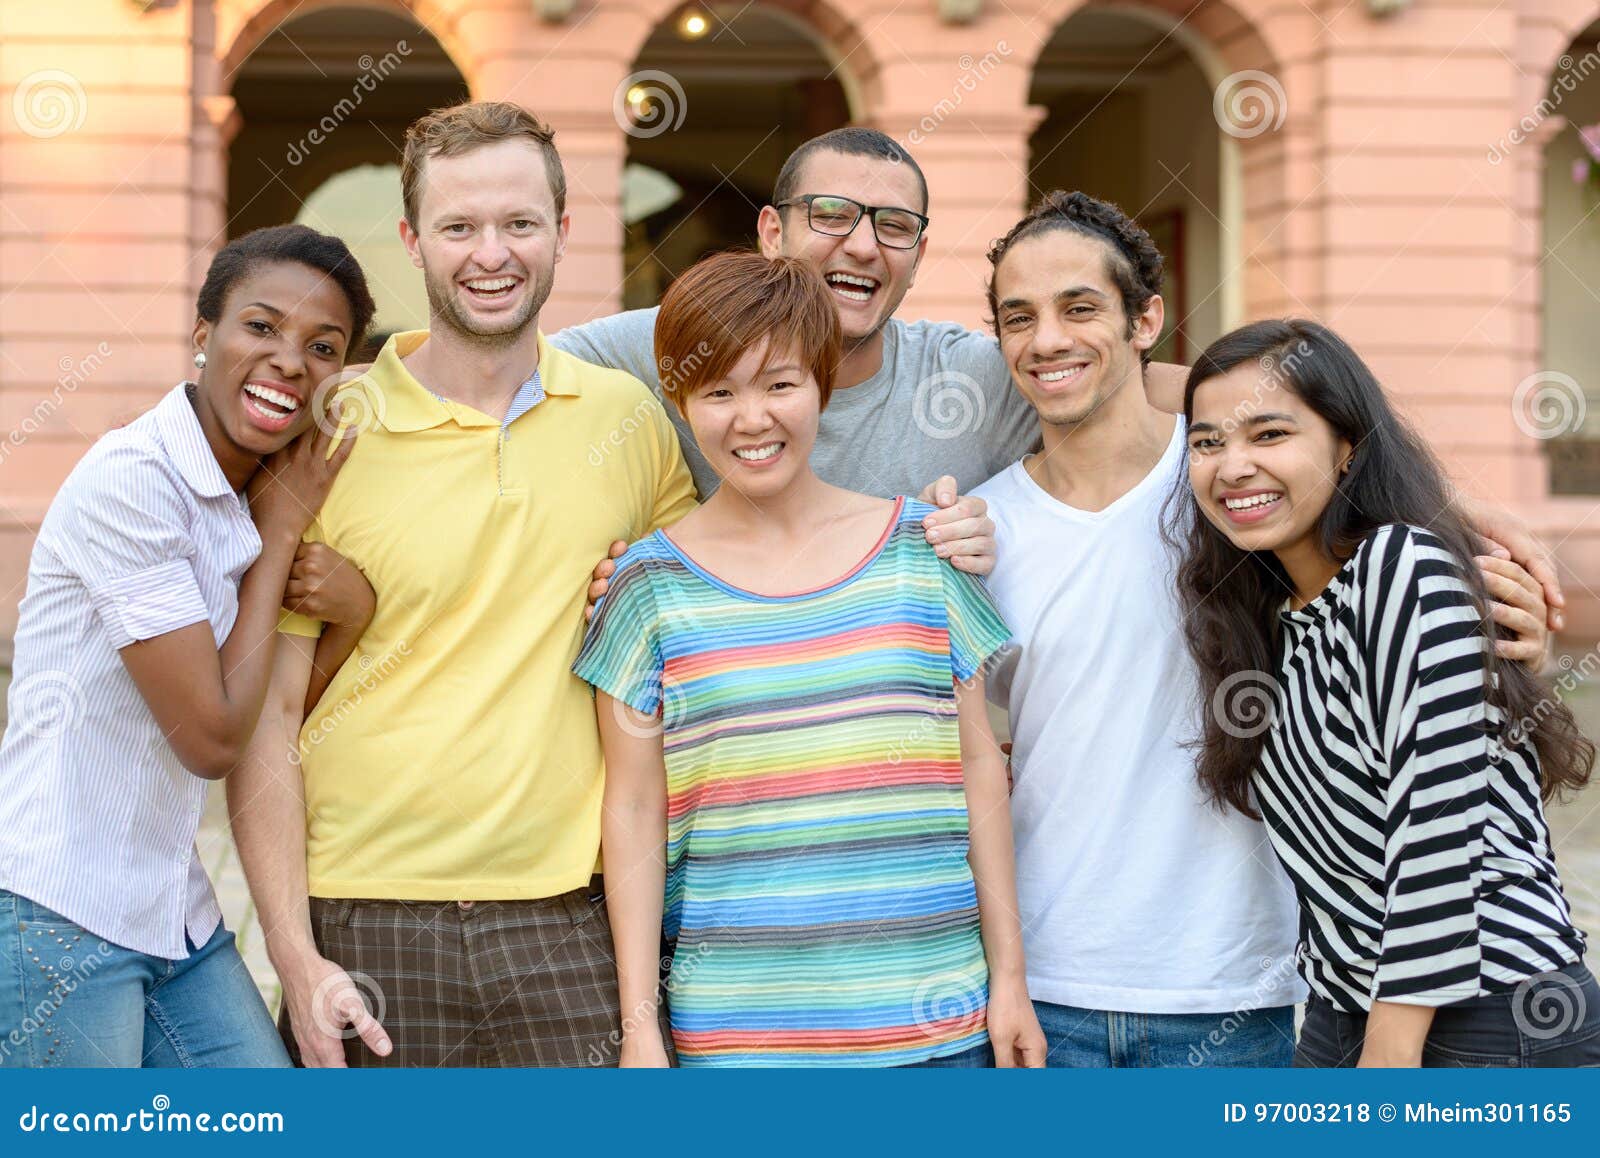 multicultural-group-people-posing-portrait-happy-outdoor-97003218.jpg